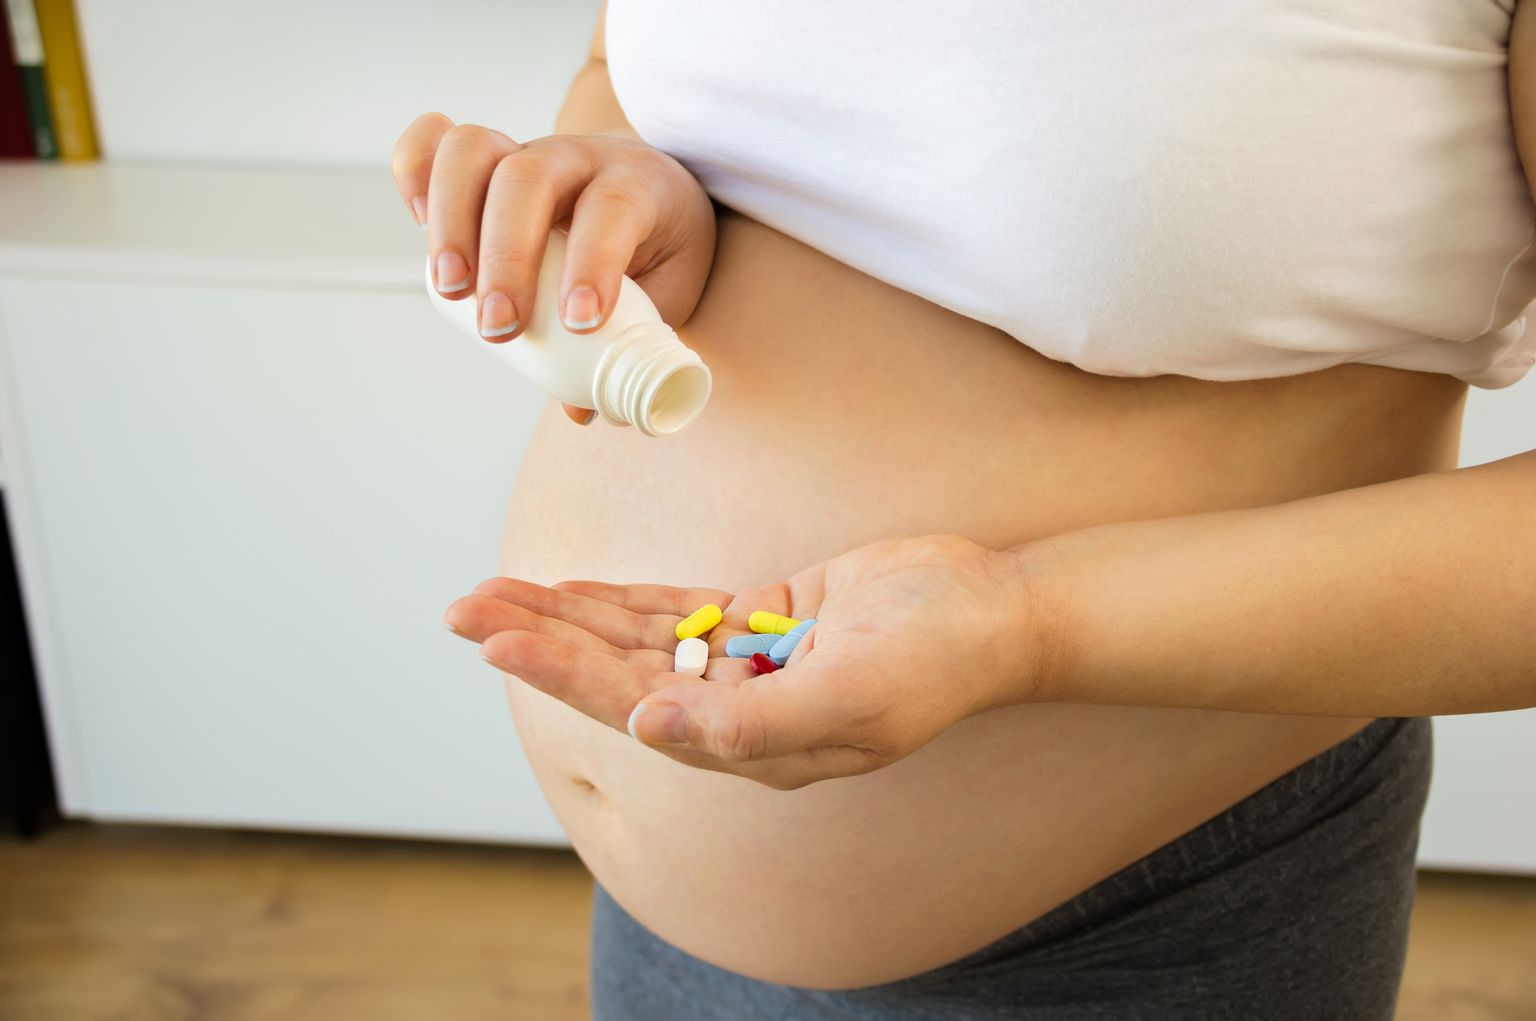 Medikamenteneinnahme in der Schwangerschaft